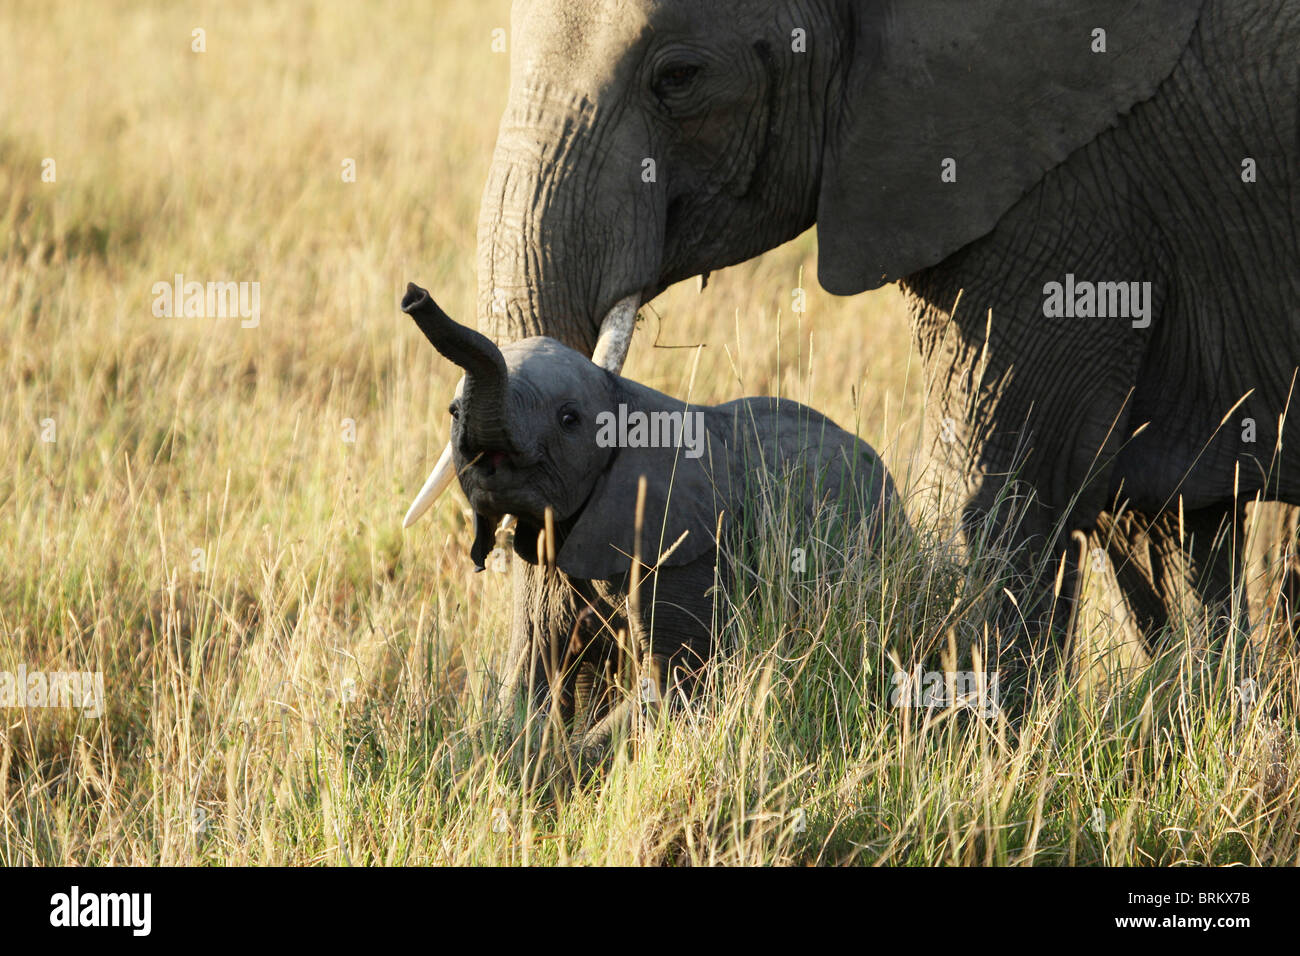 Elefant Kalb Abholung der Duft unter dem Schutz seiner Mutter Blick Stockfoto